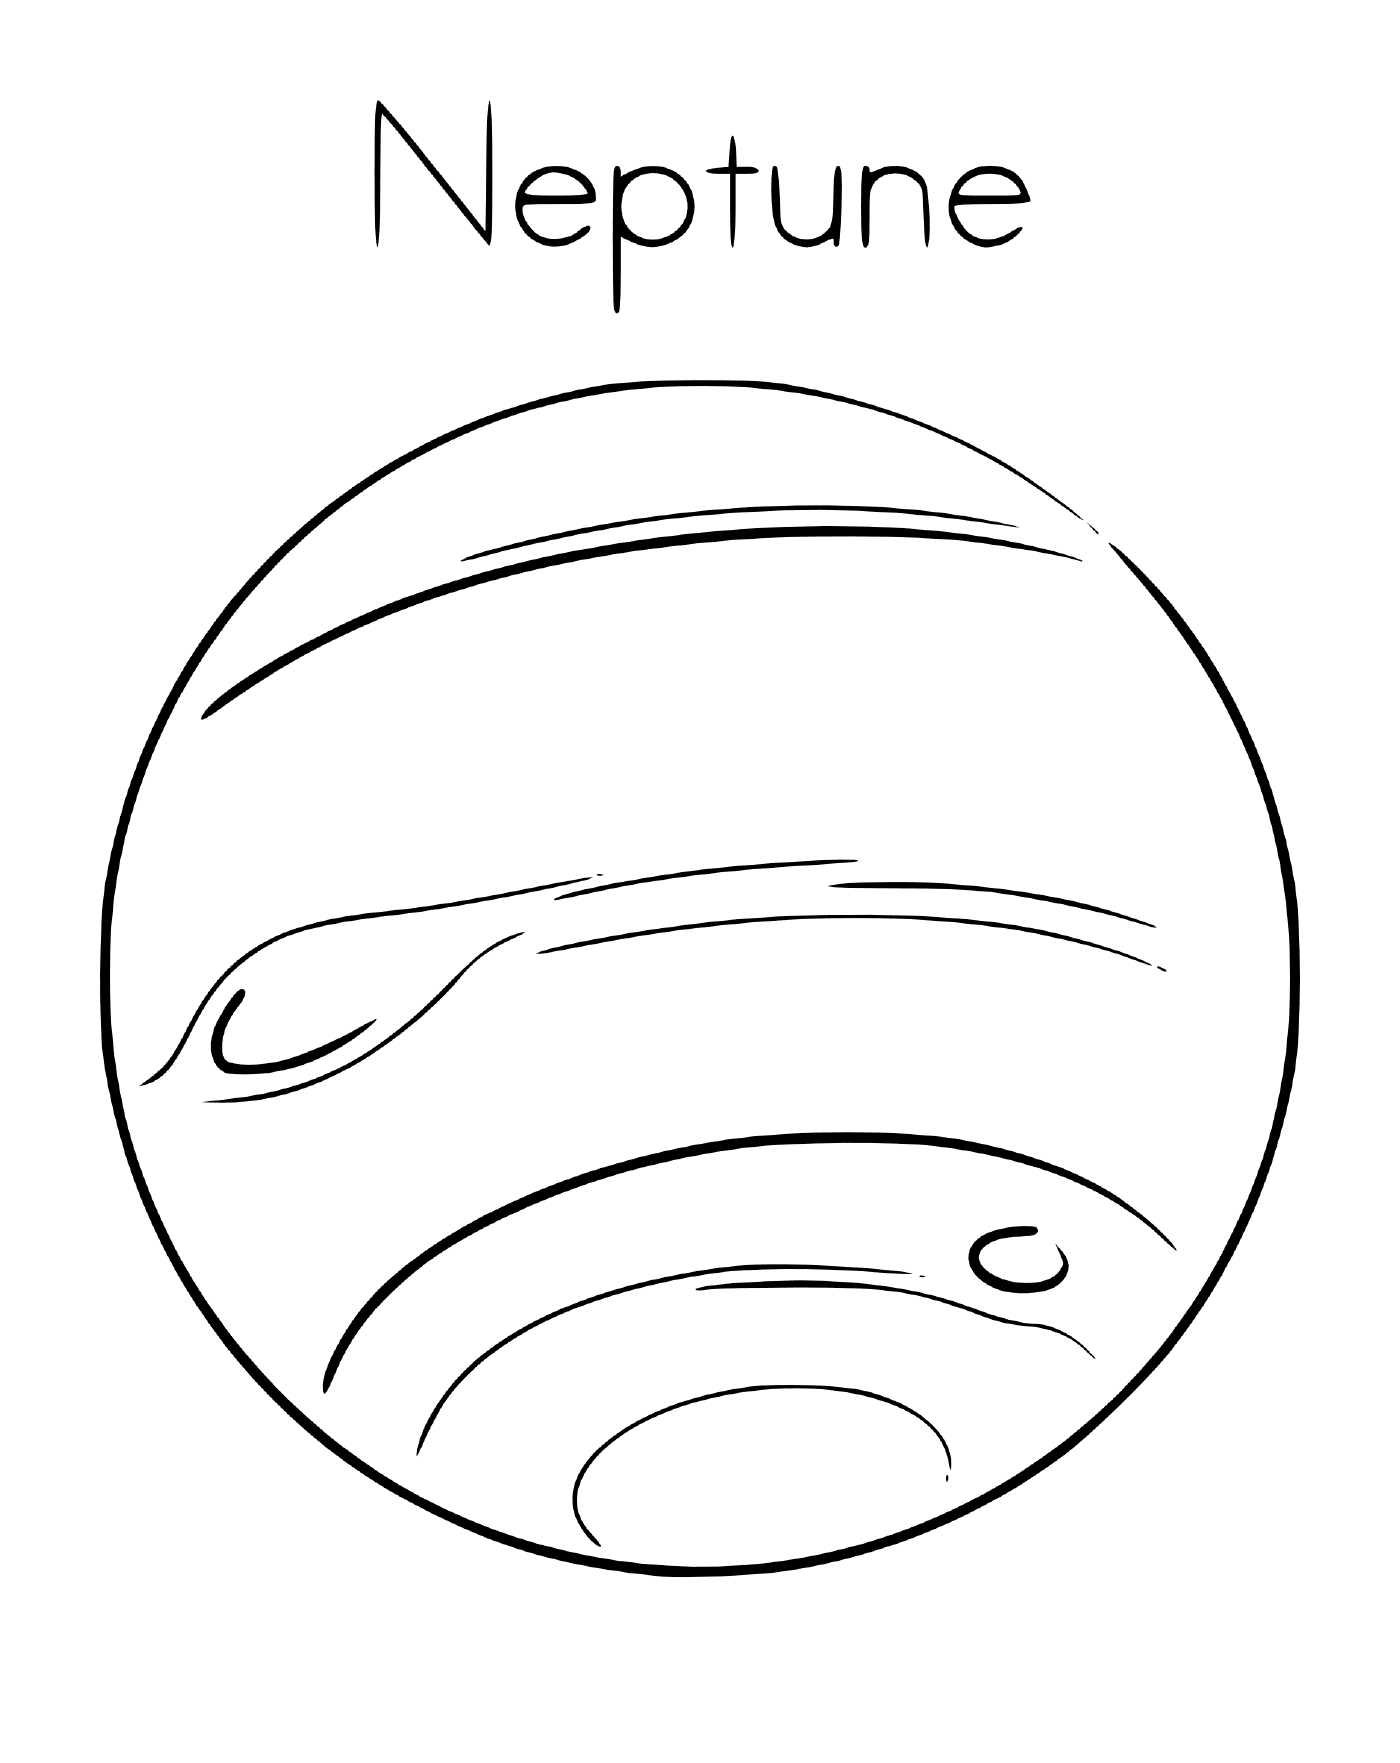  Planet Neptun im Weltraum 